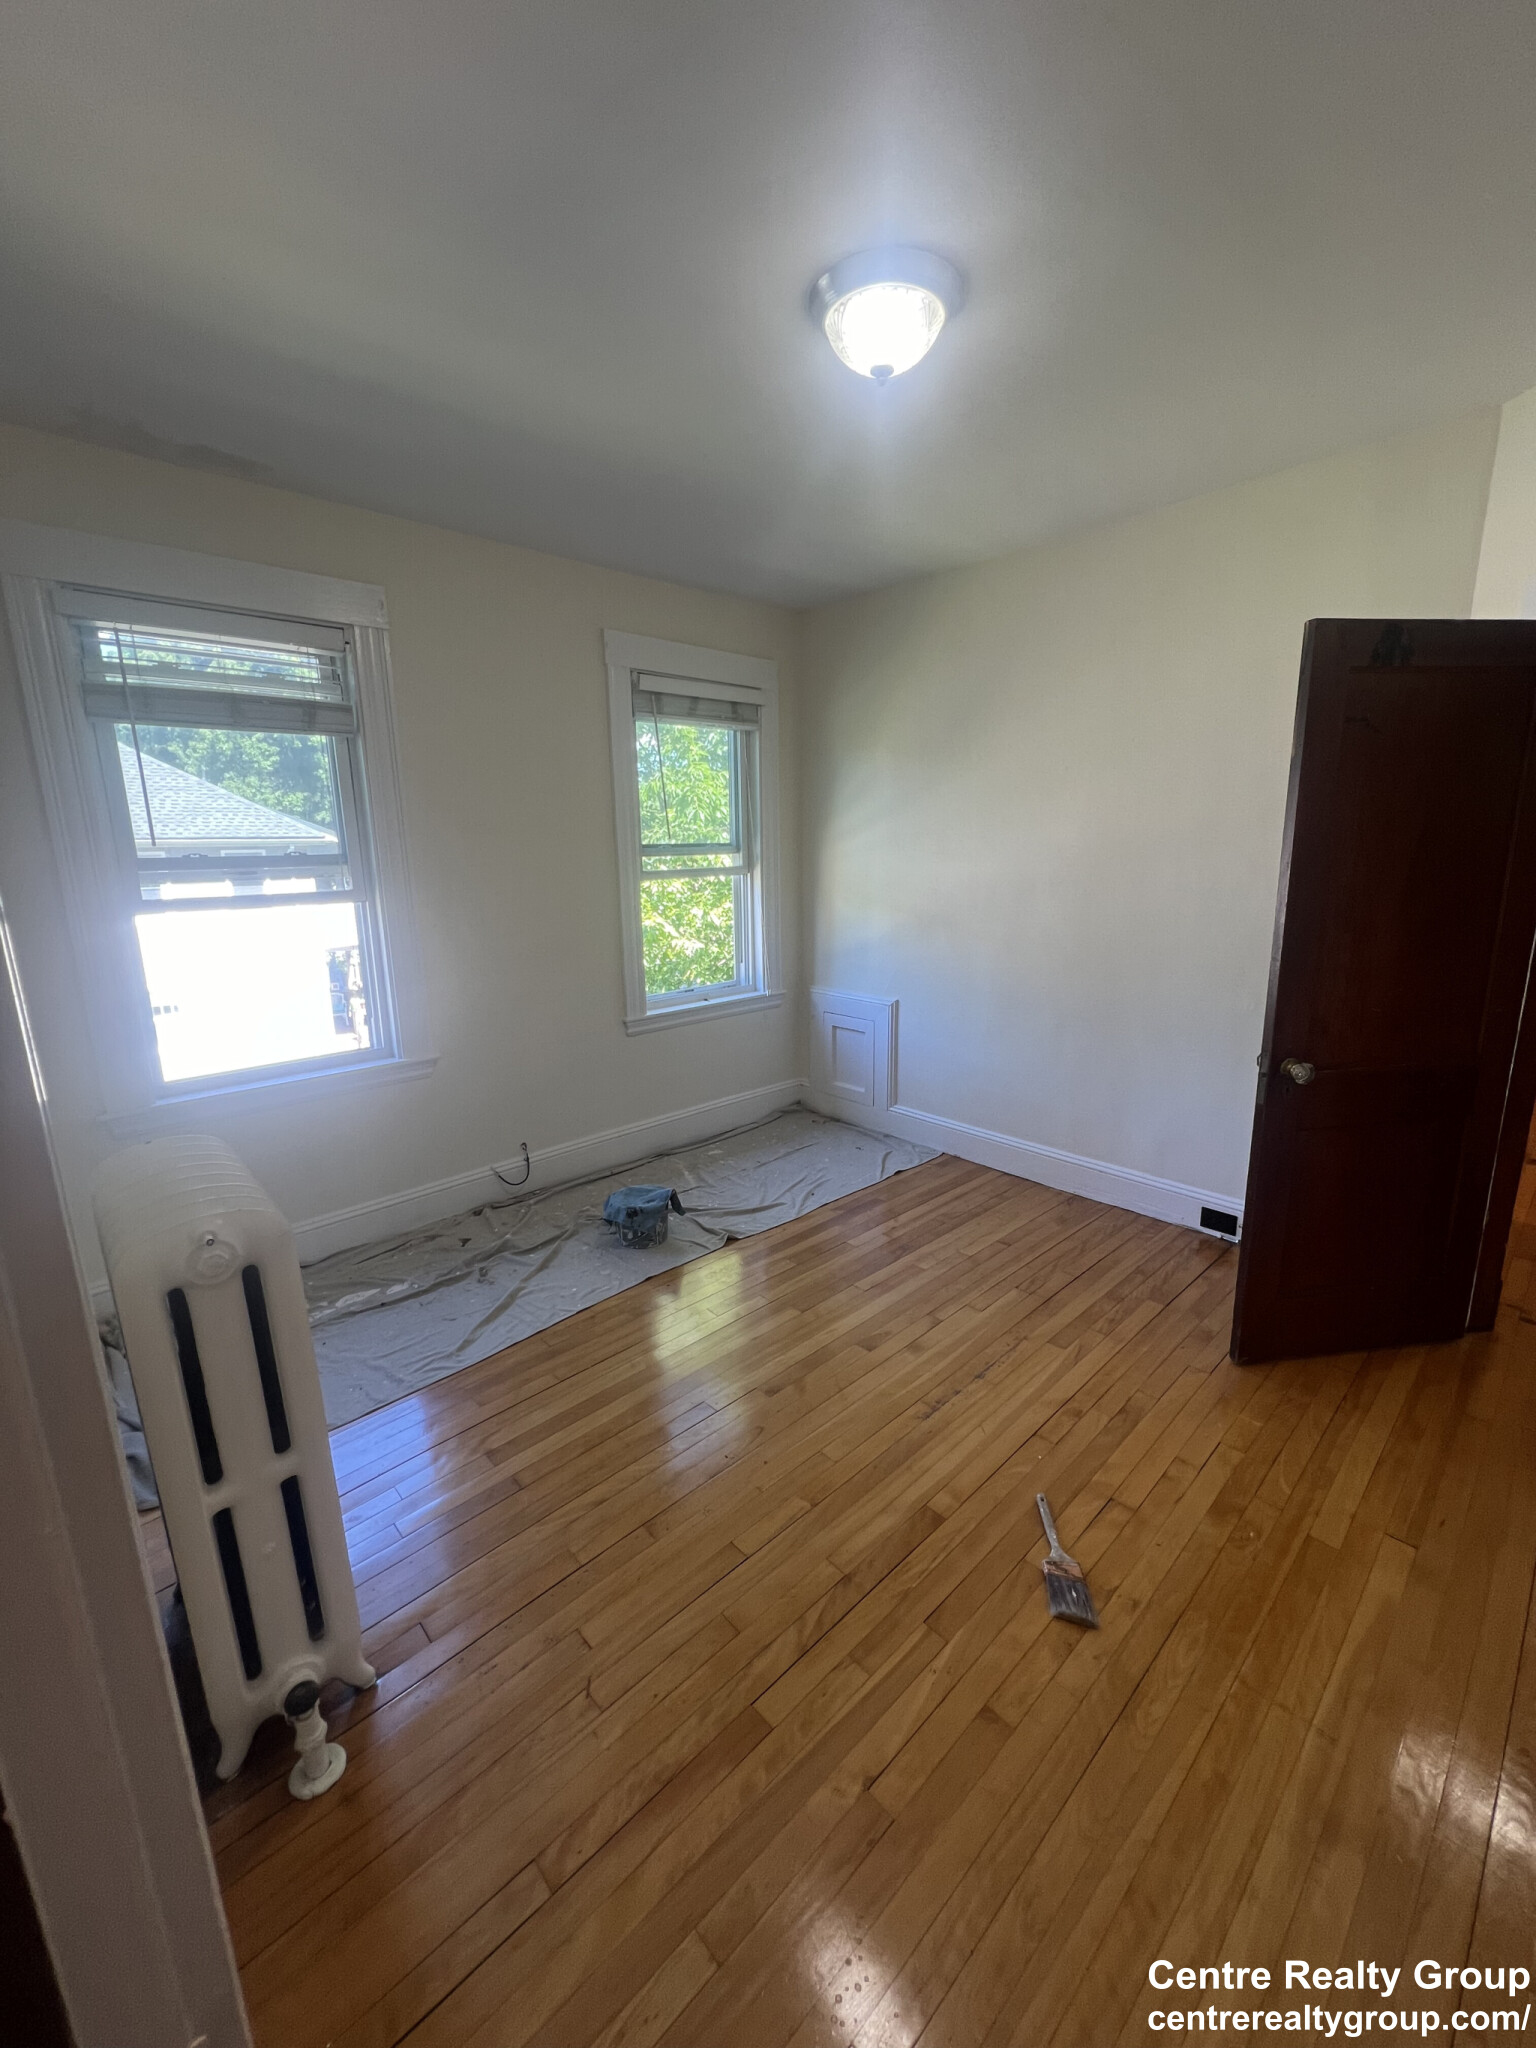 Photos of apartment on Russett Rd.,Boston MA 02132